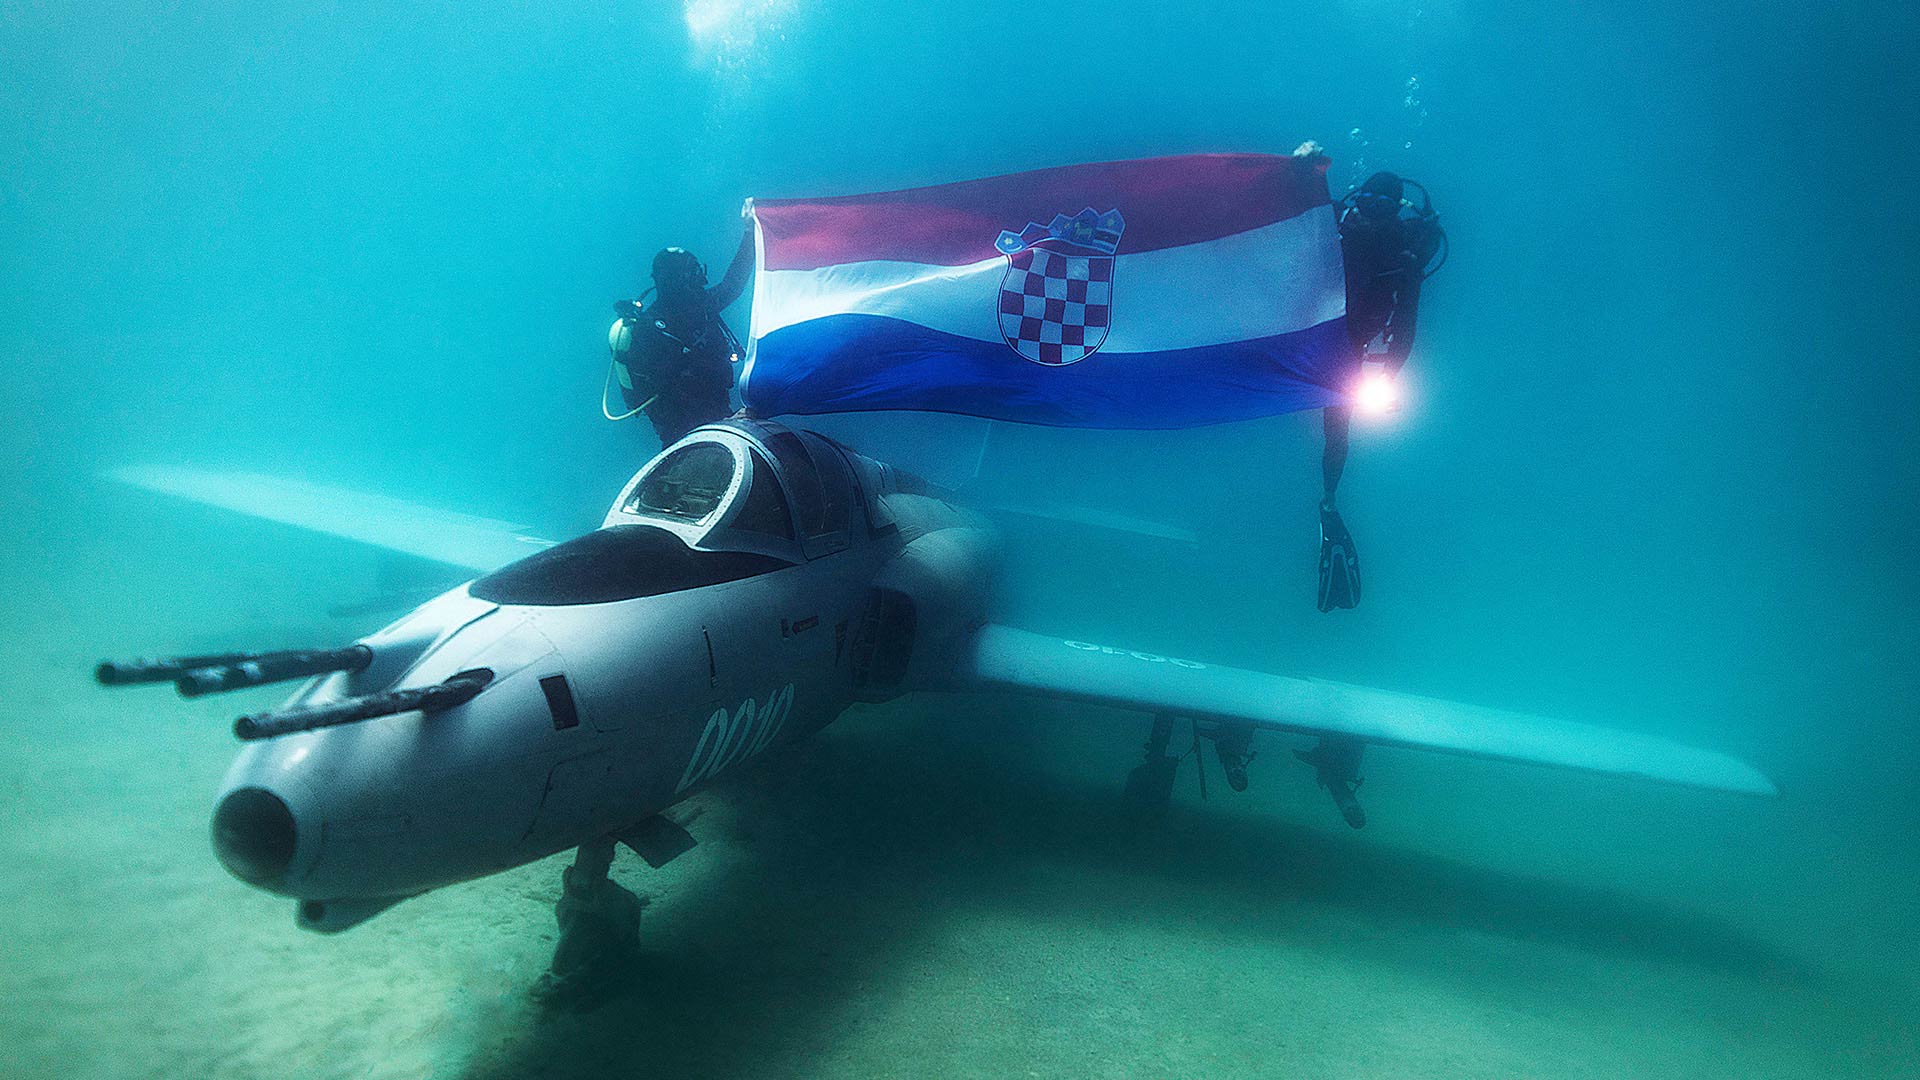 Scuba diving military plane